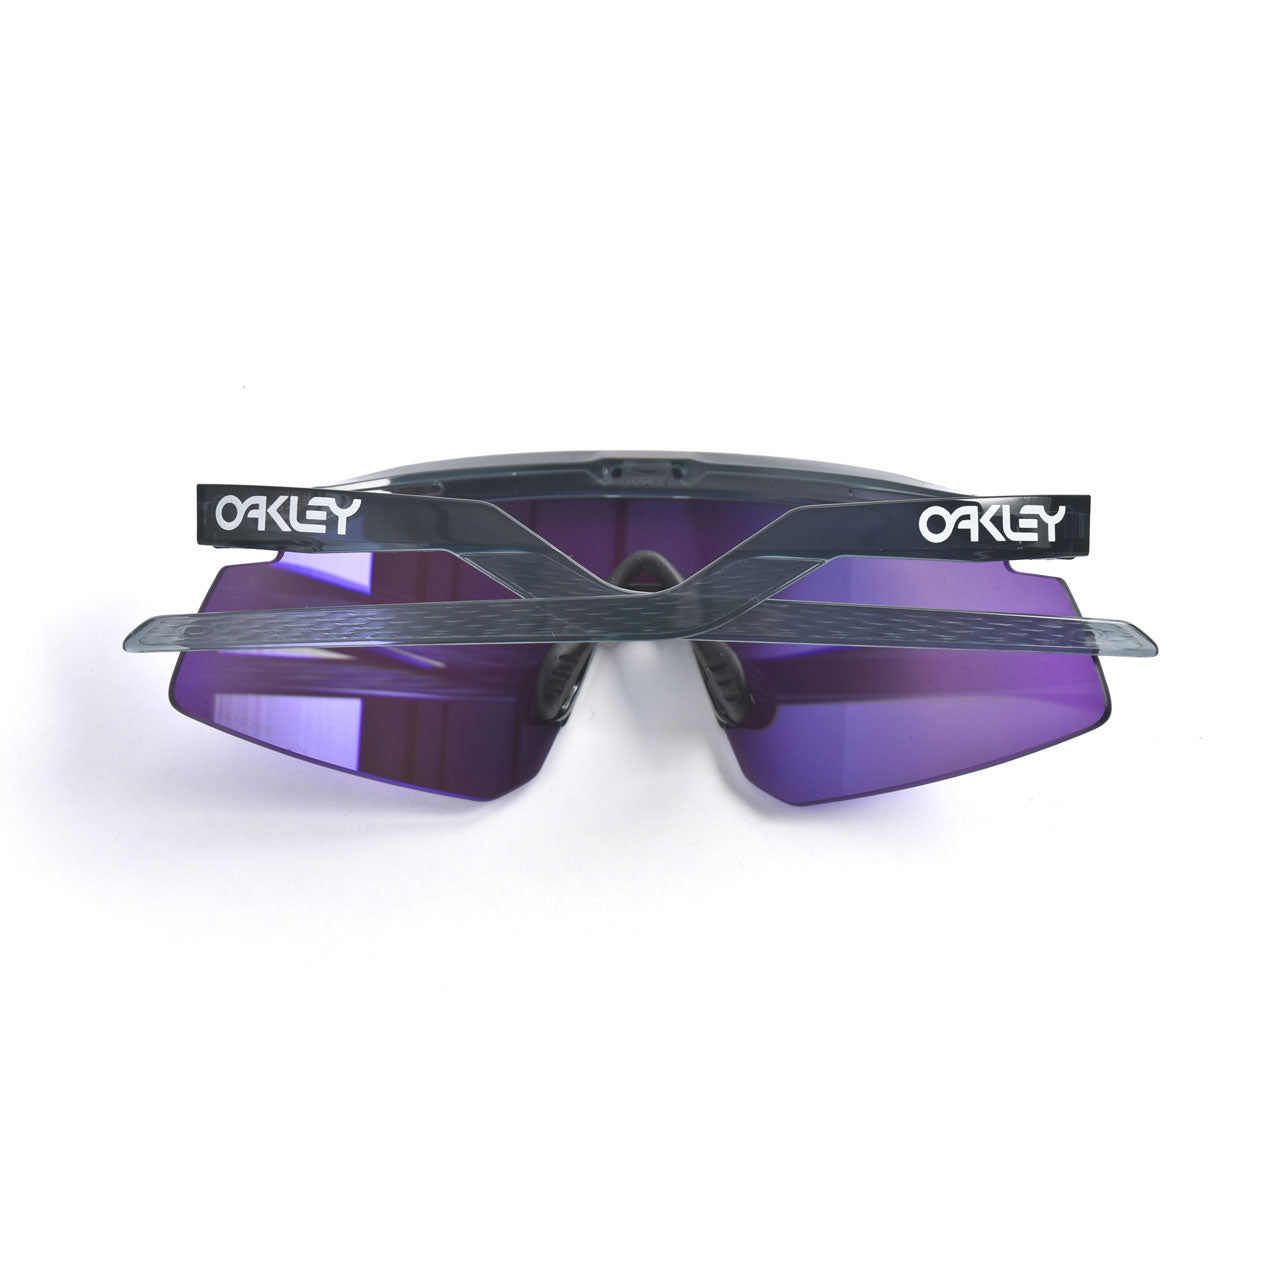 The Best Oakley Fishing Sunglasses of 2022 | SportRx - YouTube